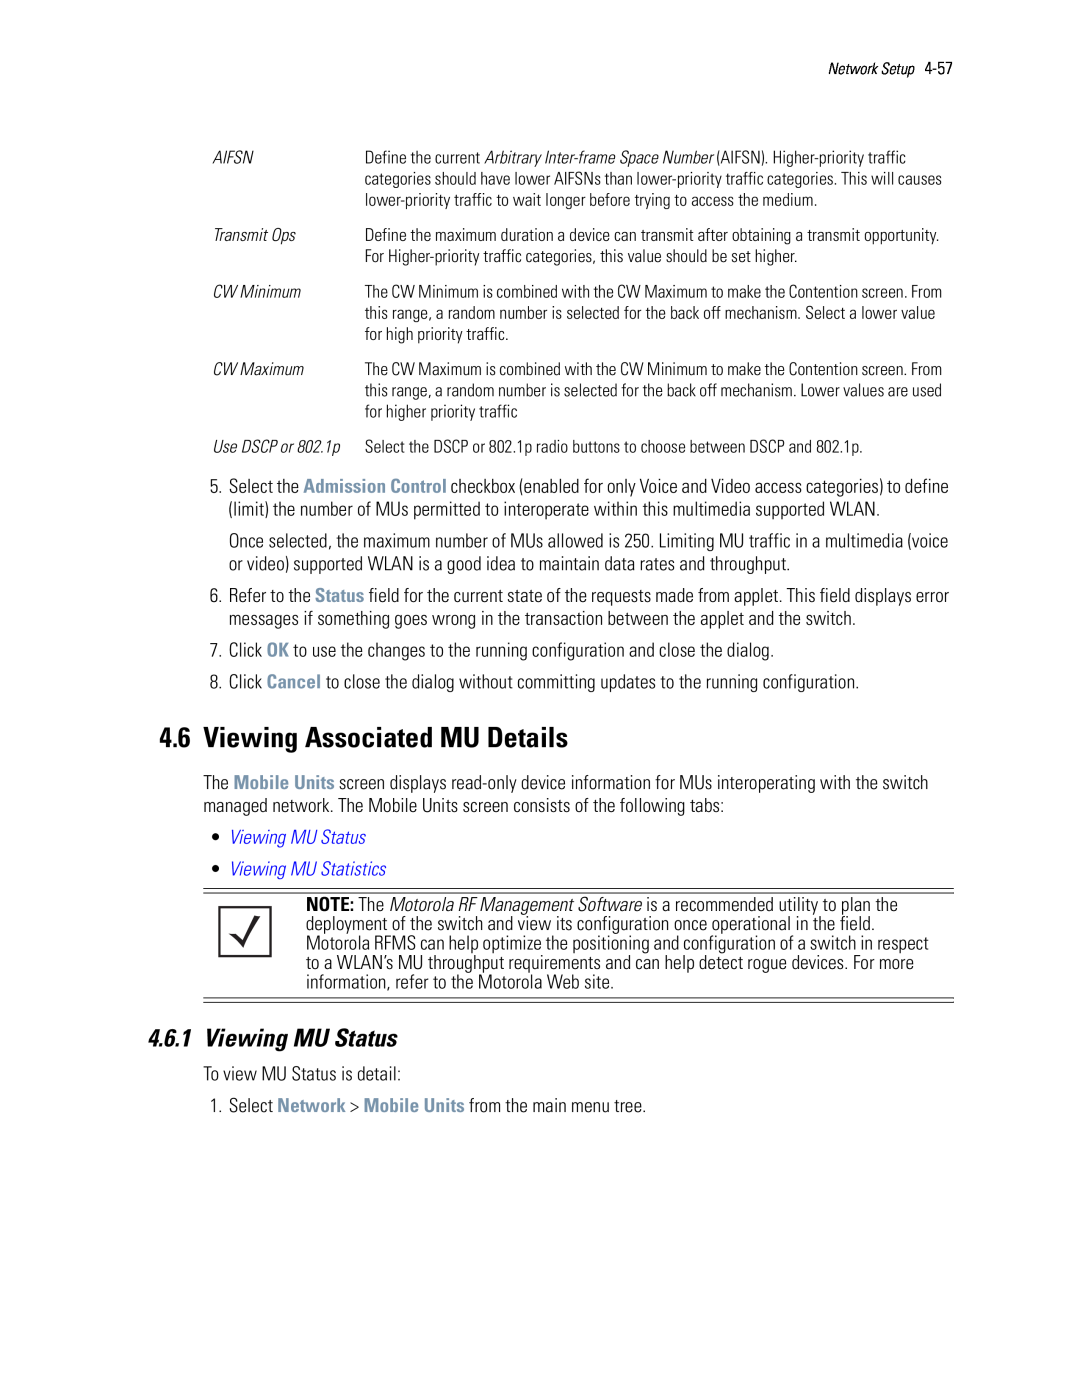 Motorola WS5100 manual 4.6Viewing Associated MU Details, •Viewing MU Status •Viewing MU Statistics 